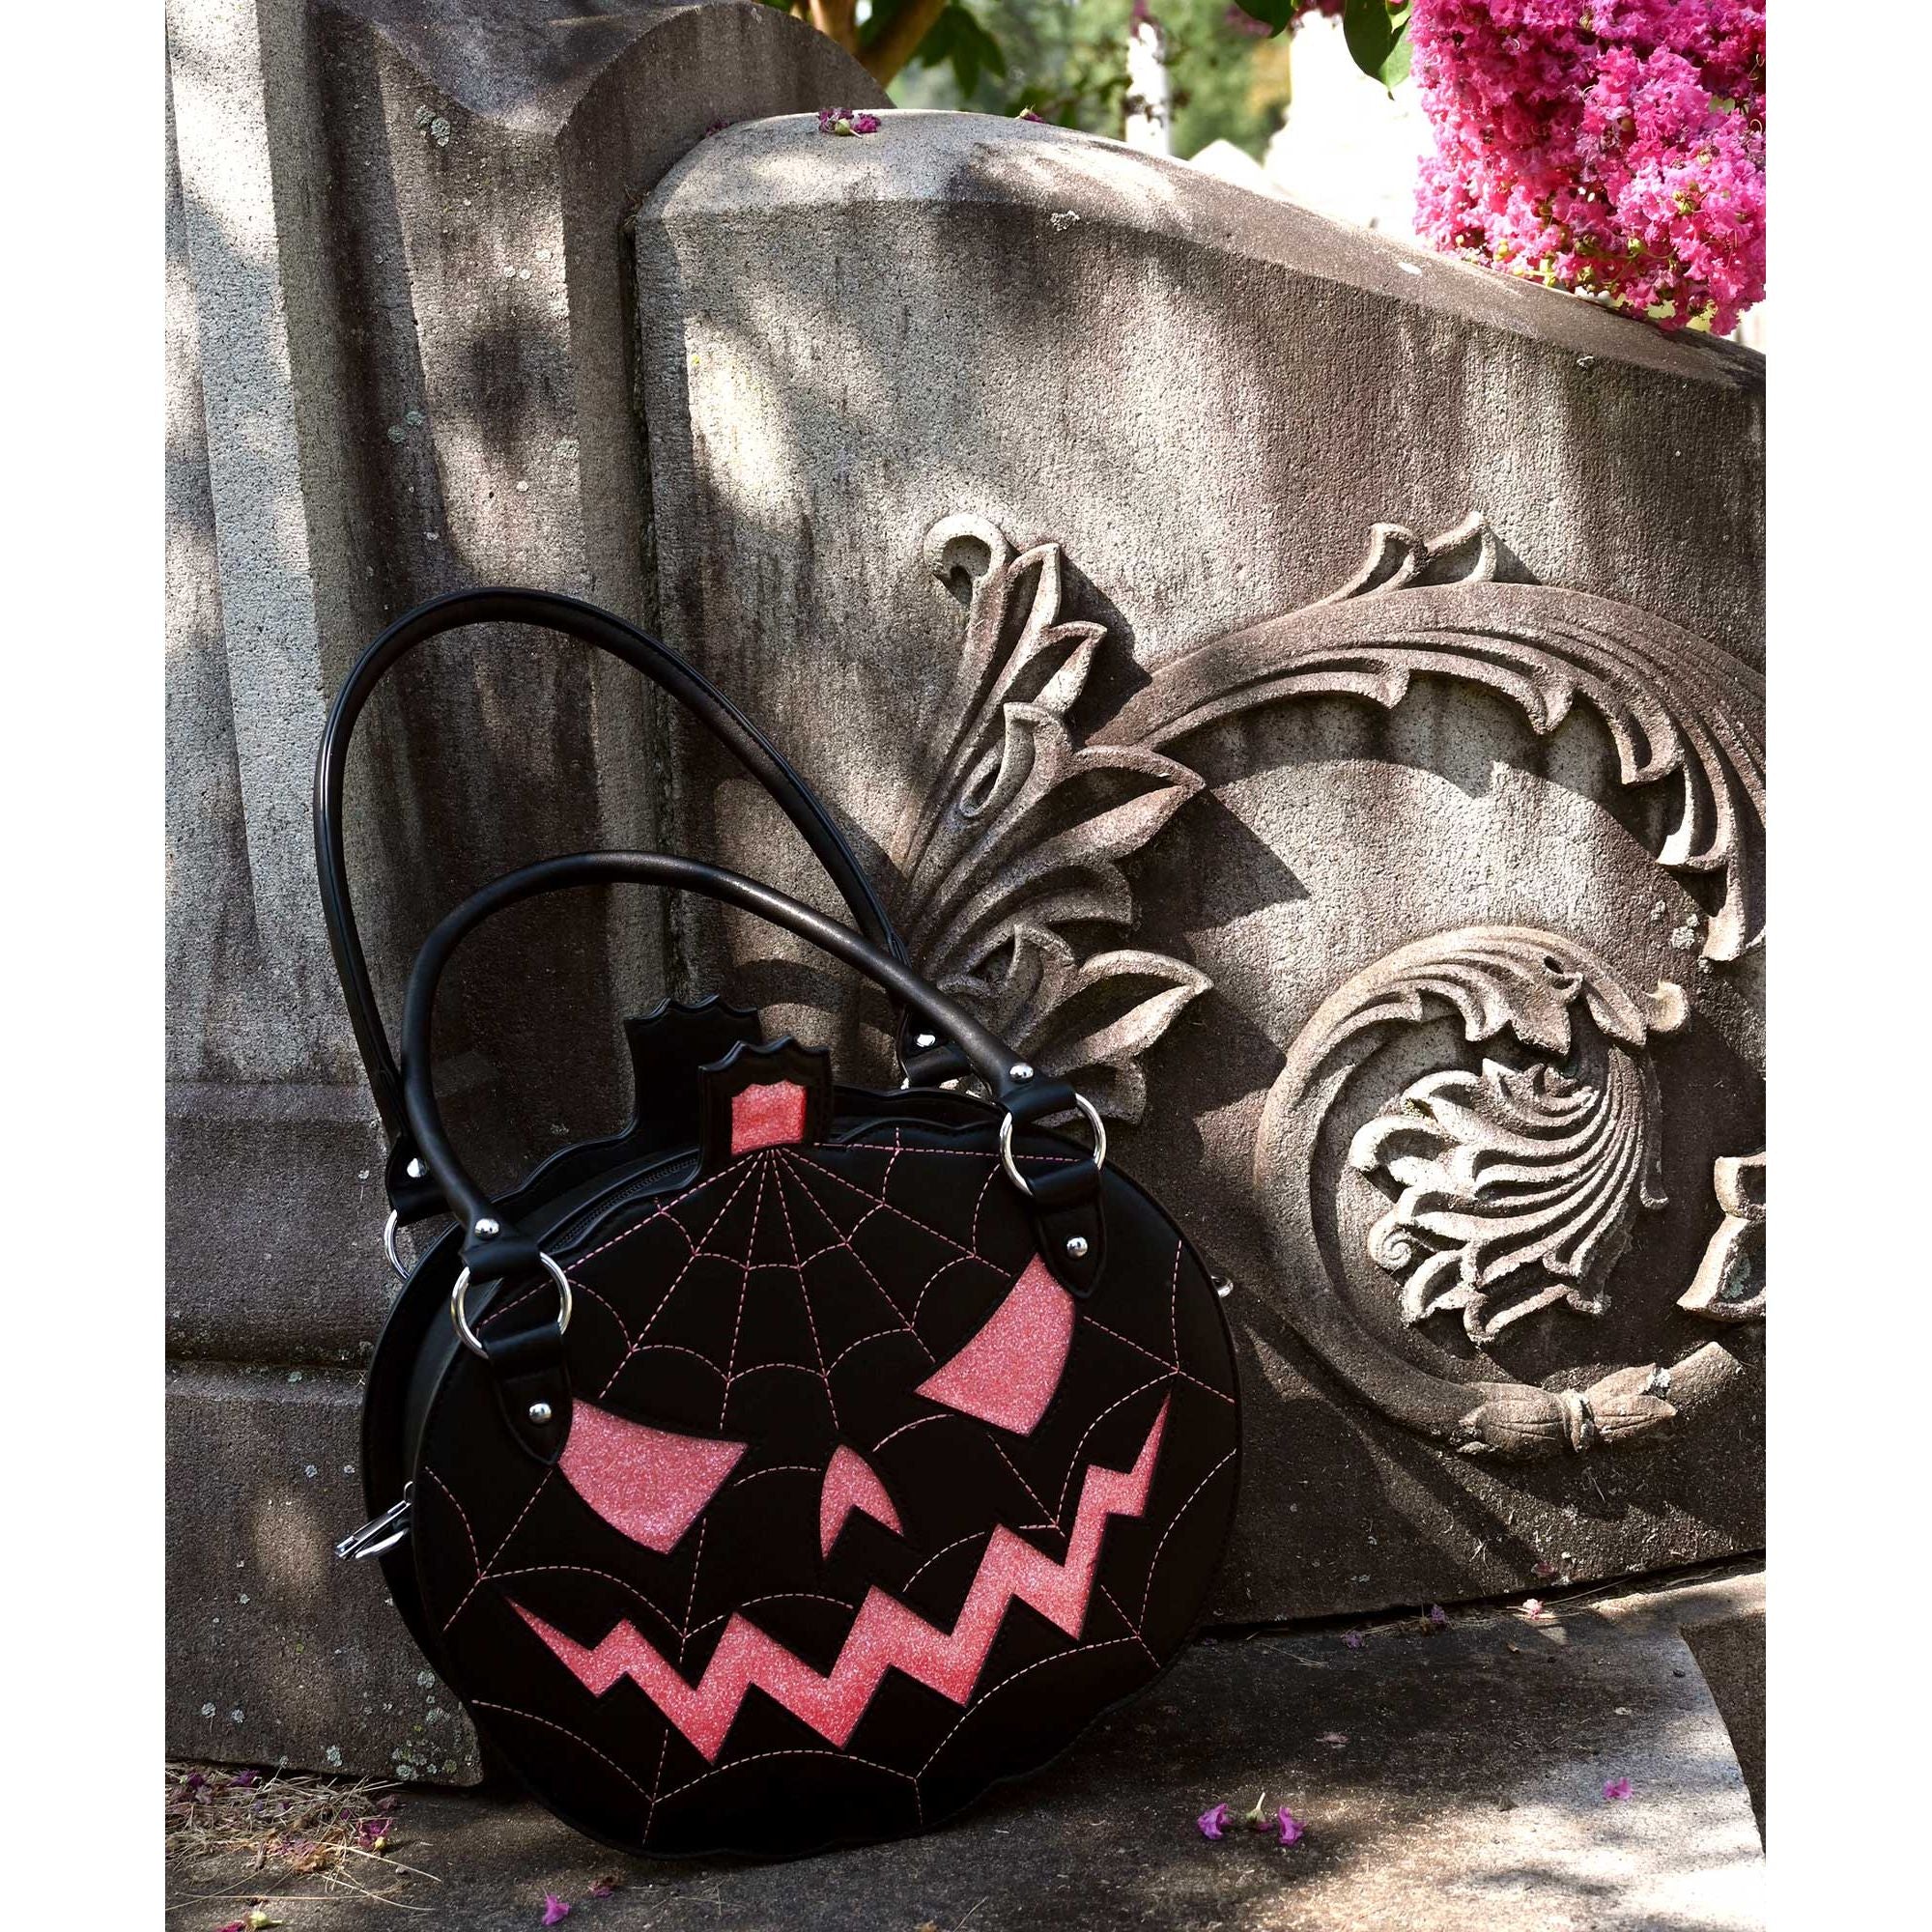 Personalized Halloween Pumpkin Boys Plush Trick or Treat Bag